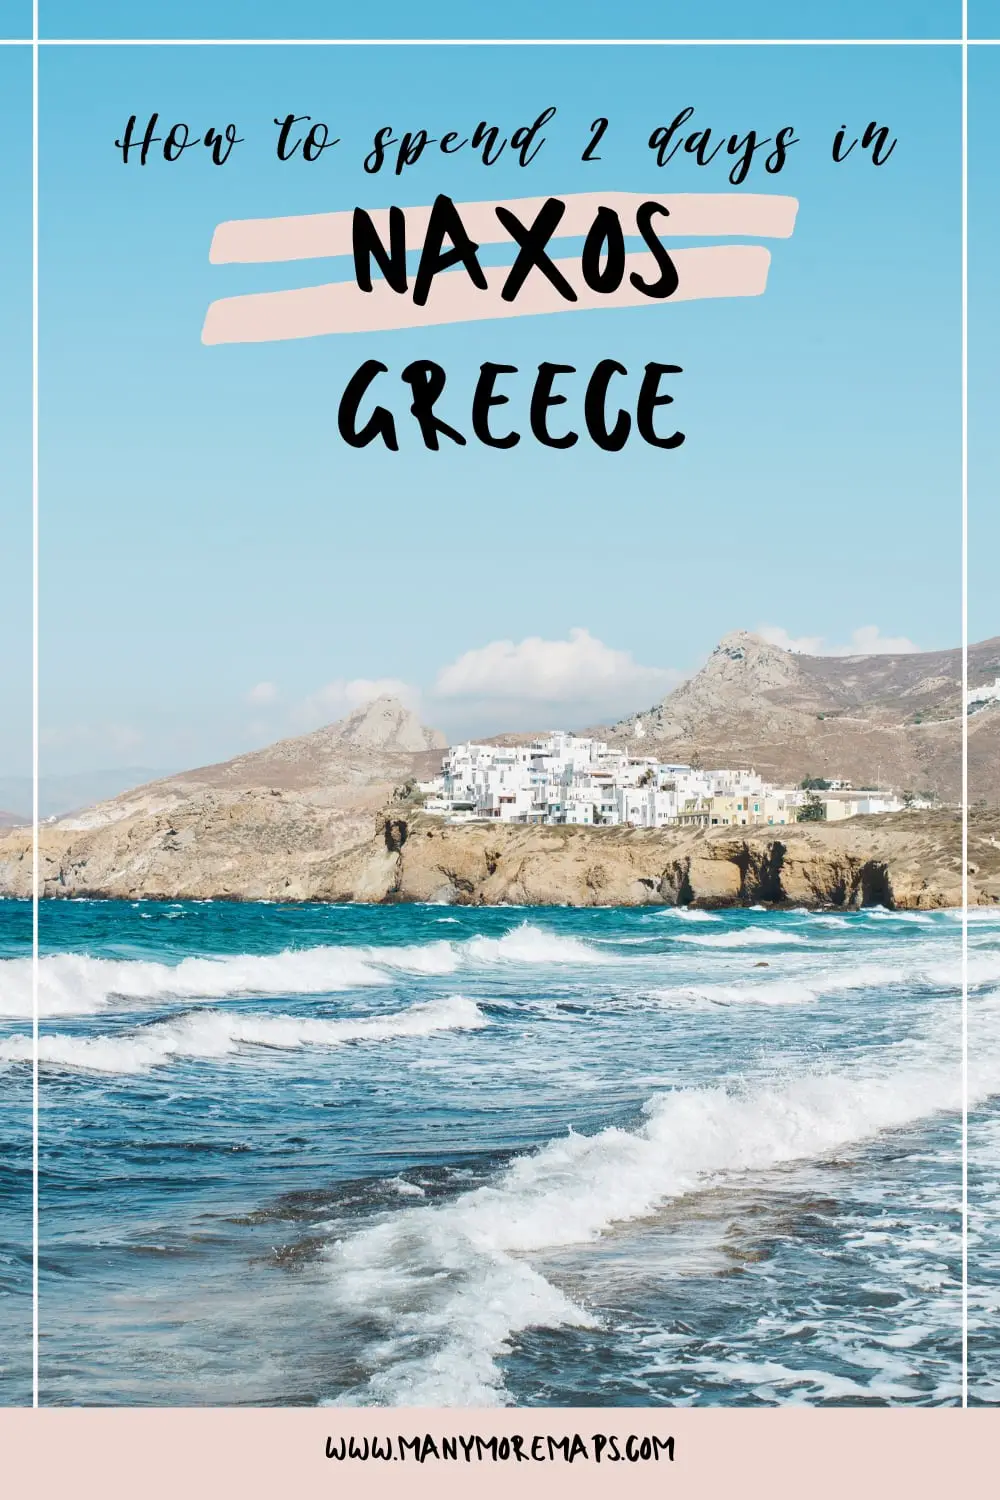 Naxos Pinterest Pin